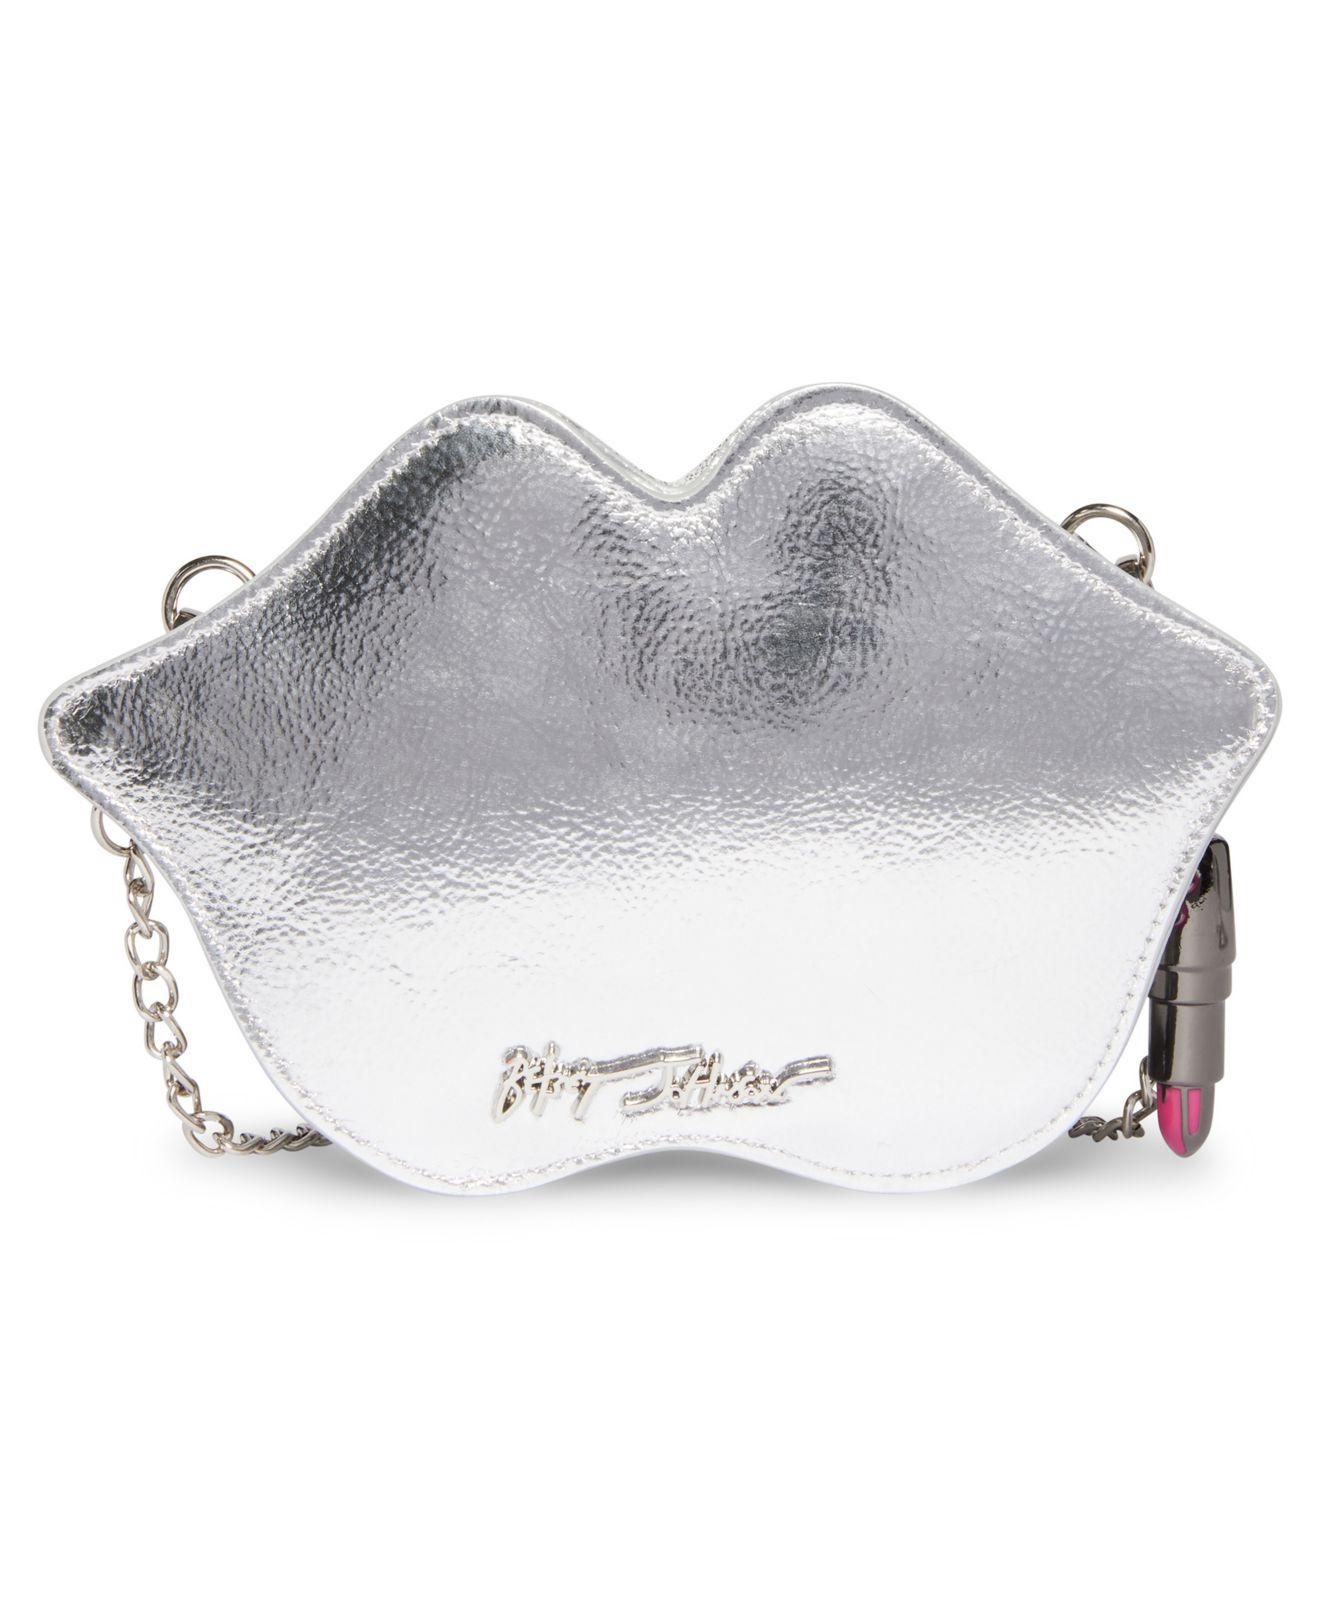 Betsey Johnson Will You Be Mine Tote Handbags, $128